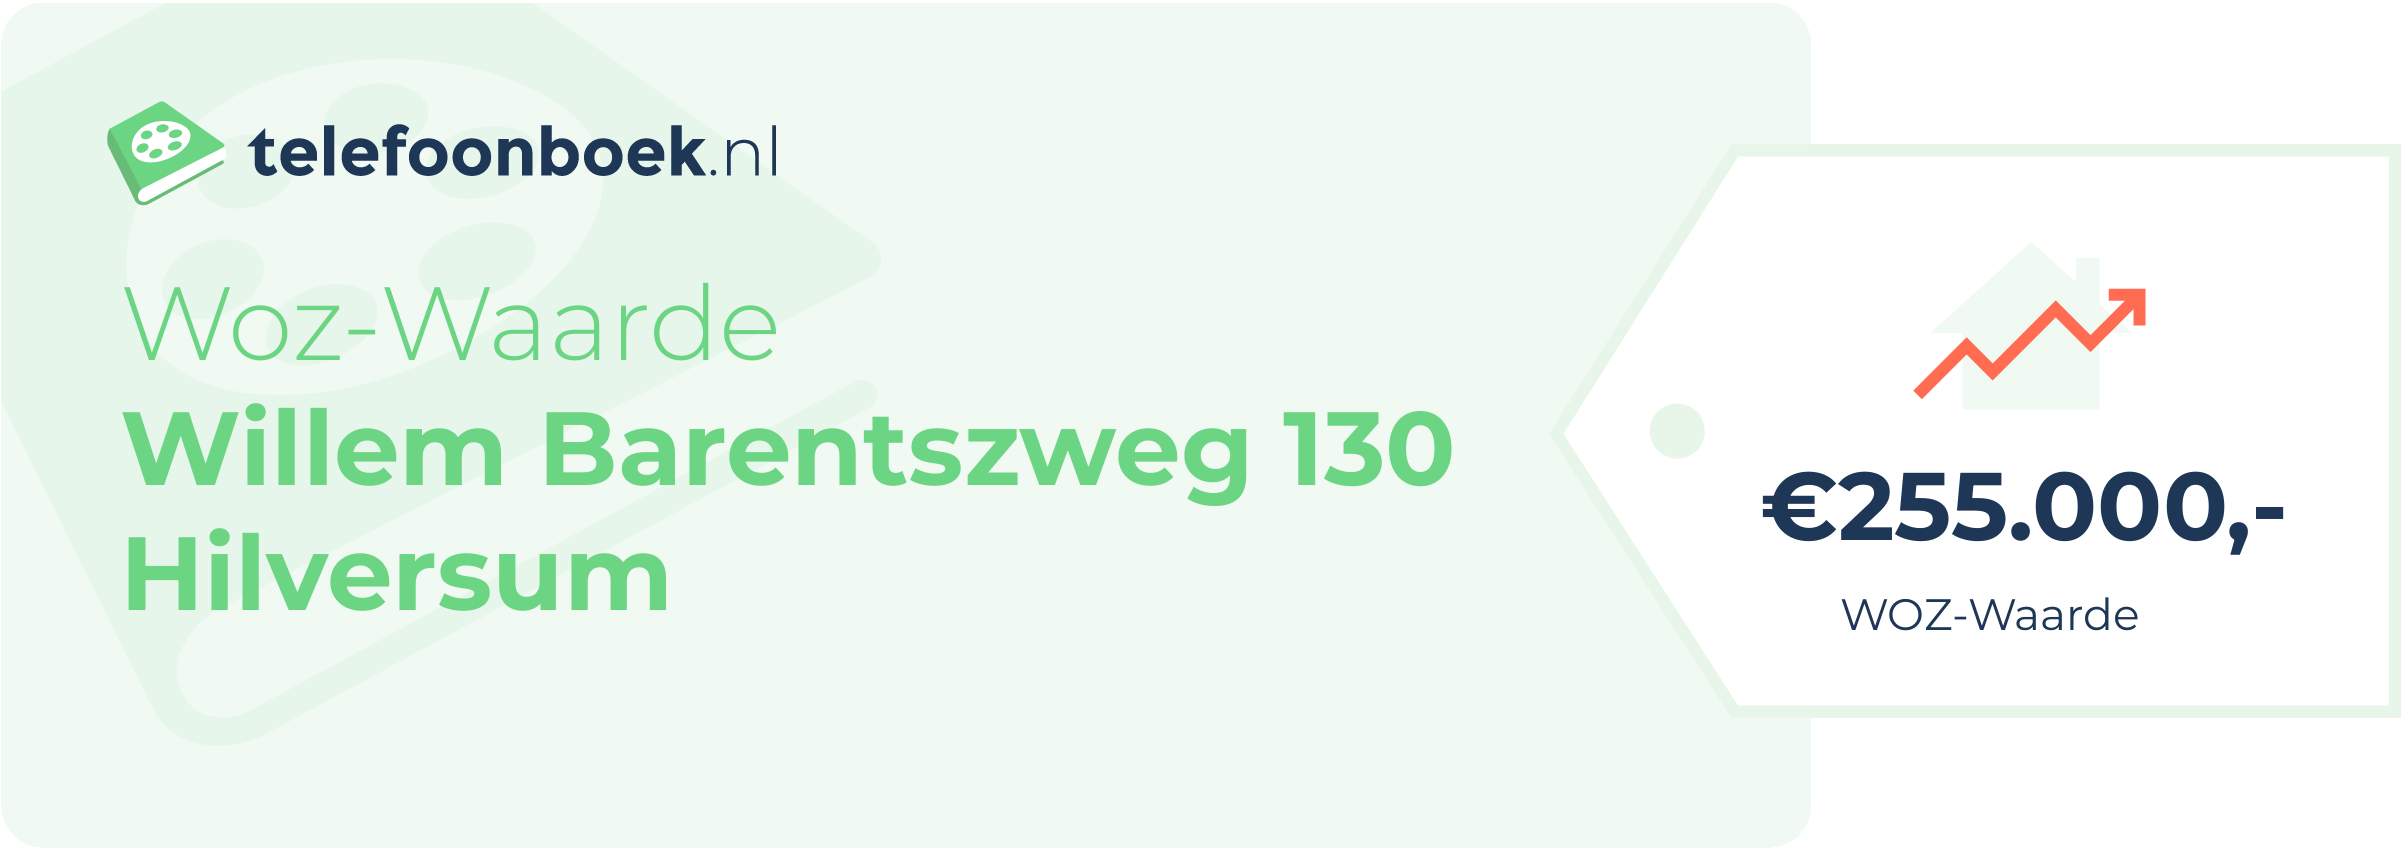 WOZ-waarde Willem Barentszweg 130 Hilversum